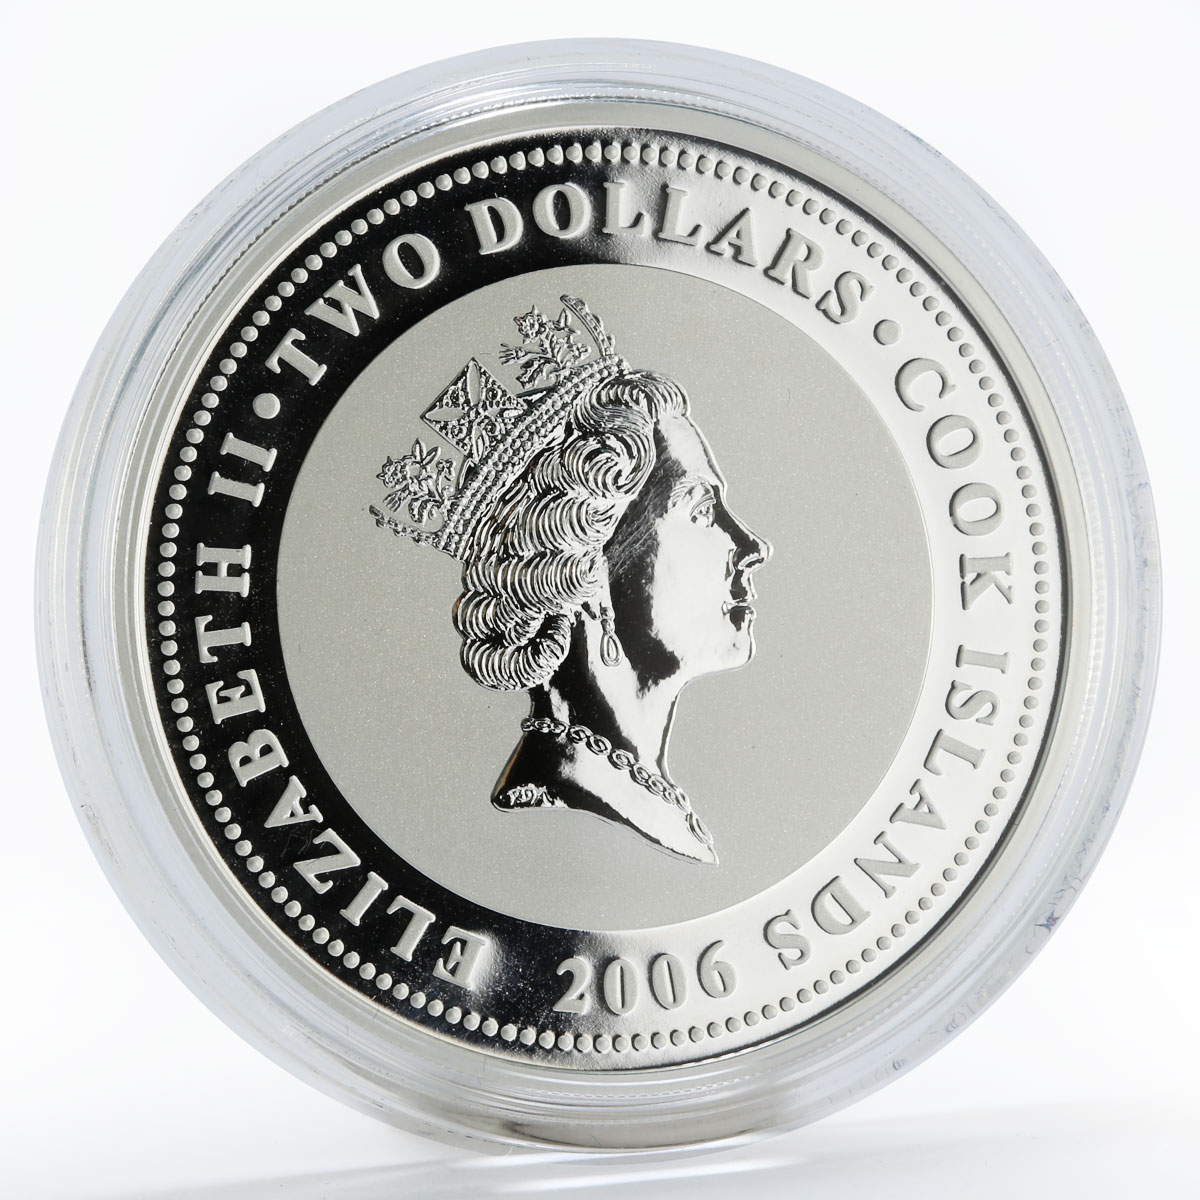 Cook Island 2 dollars Duesenberg SSJ Classic Speedsters silver proof coin 2006